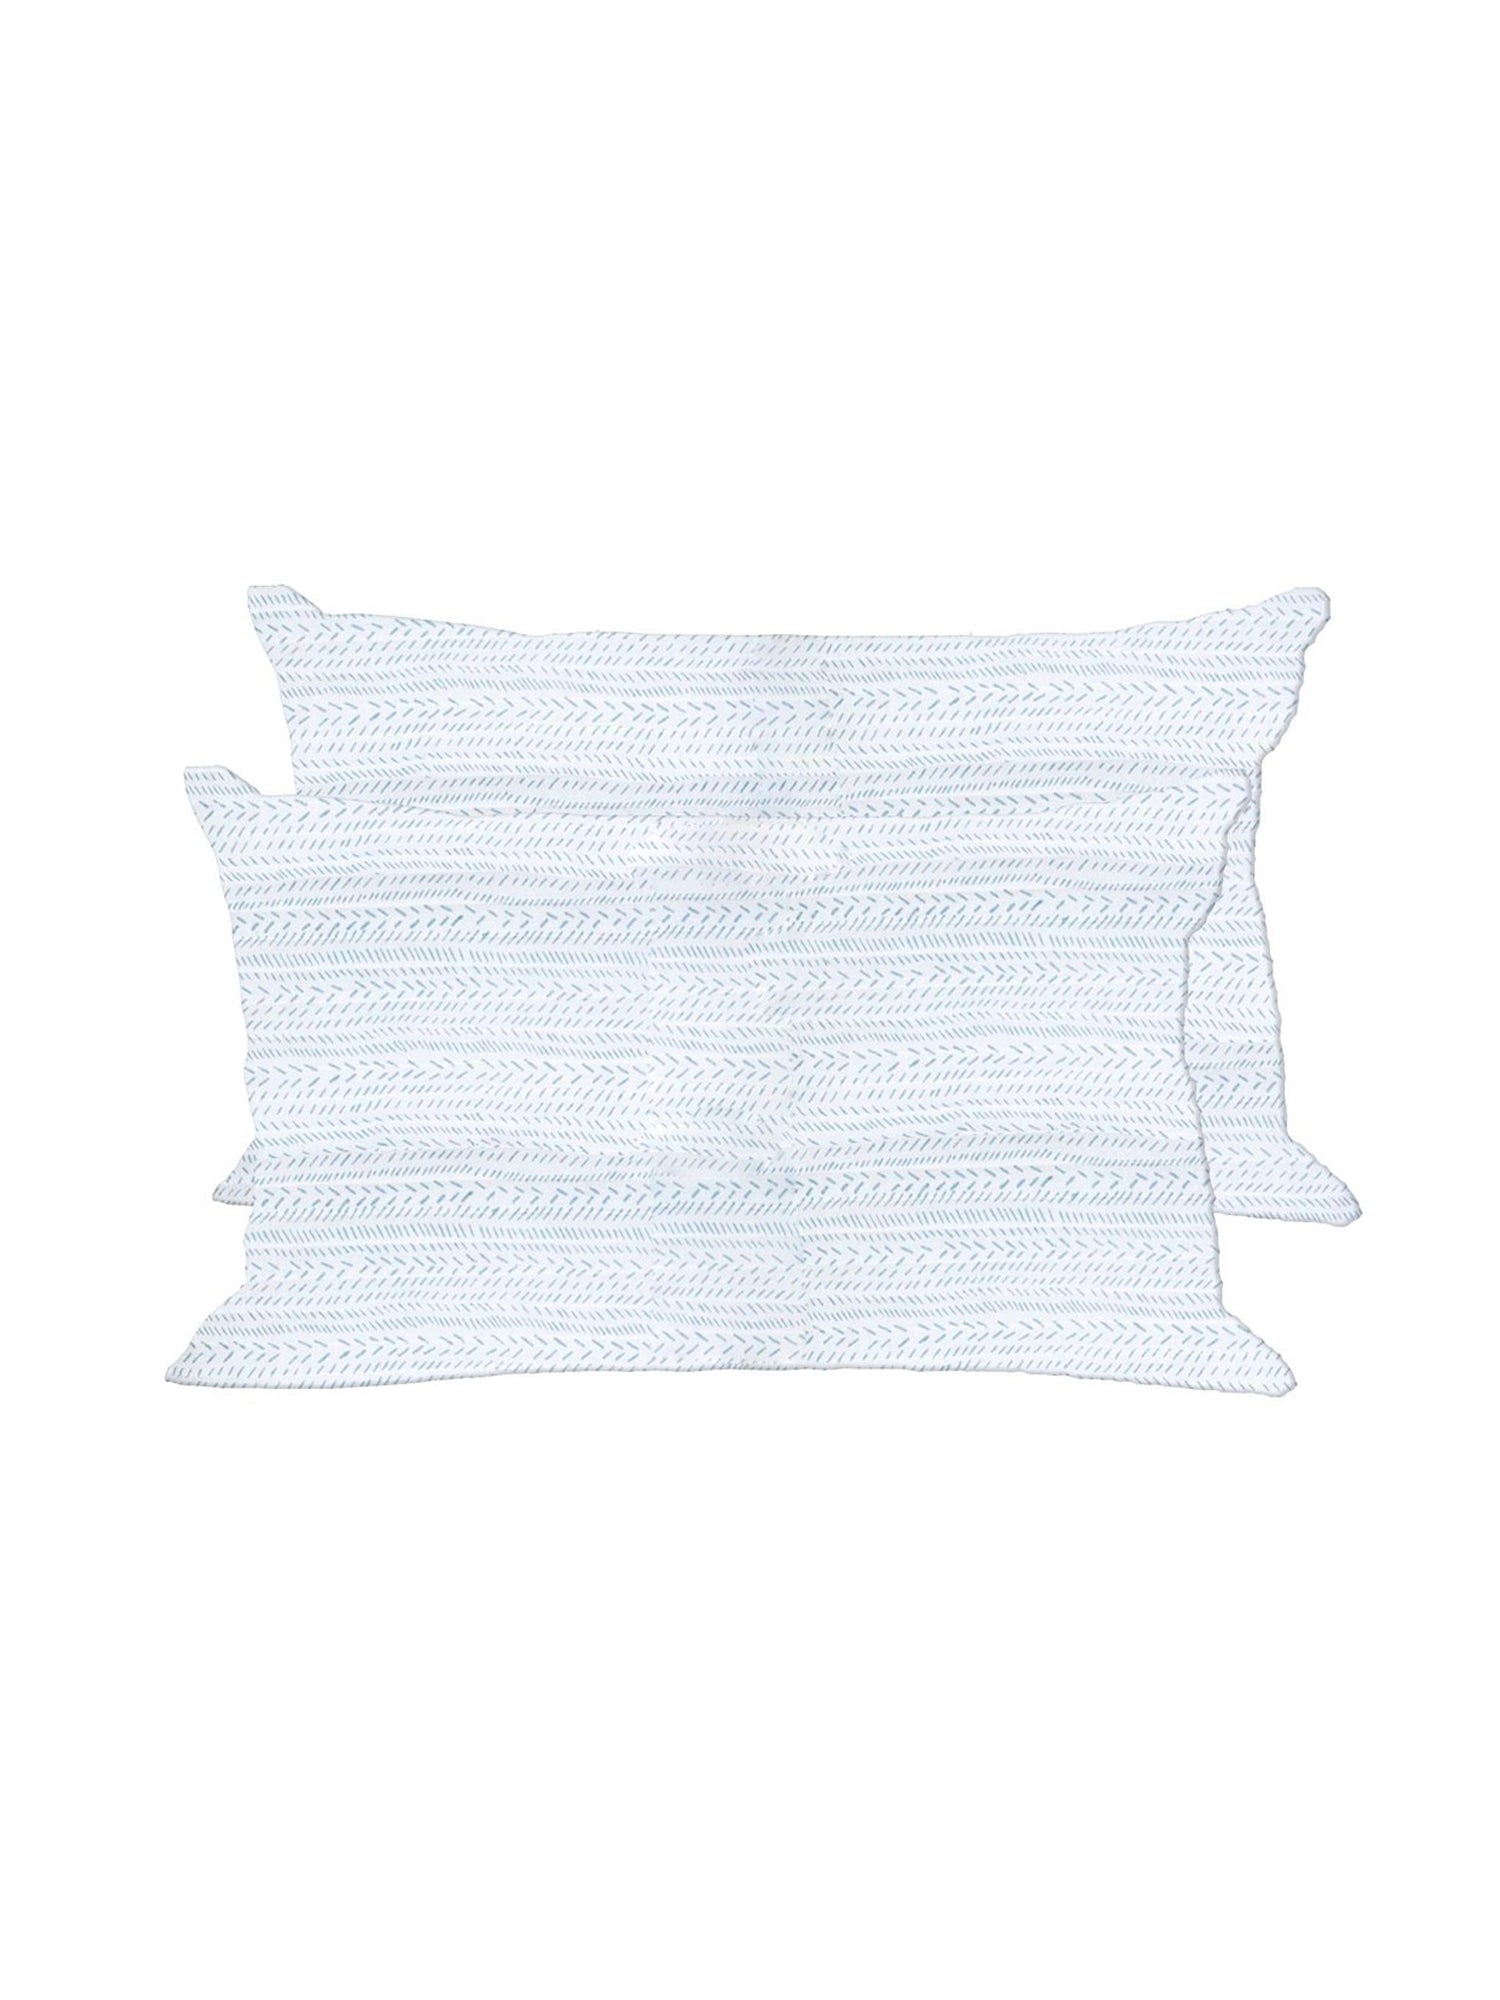 Provence Blue Twin Sheet & Pillowcase Set